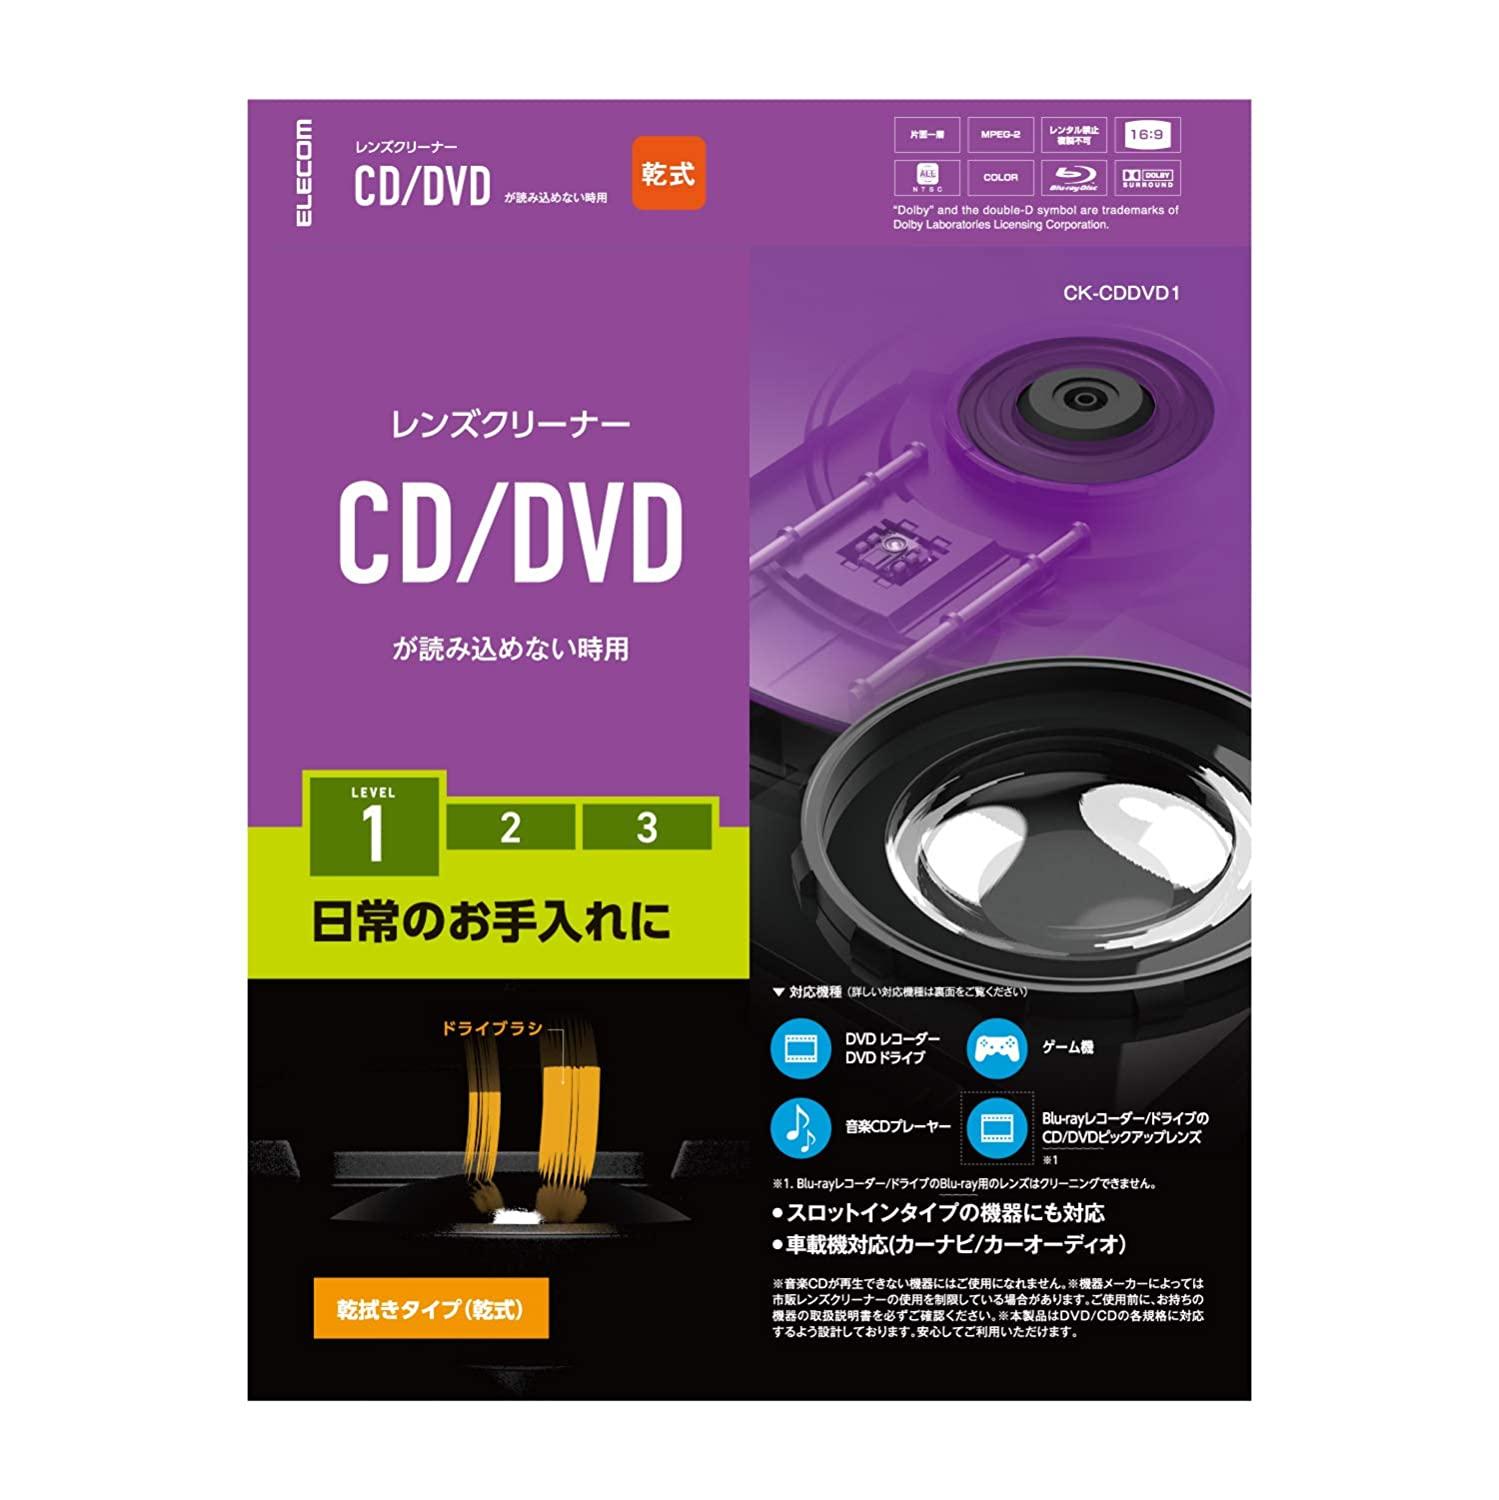 CK-CDDVD1 YN[i[/CD/DVD/(CK-CDDVD1)